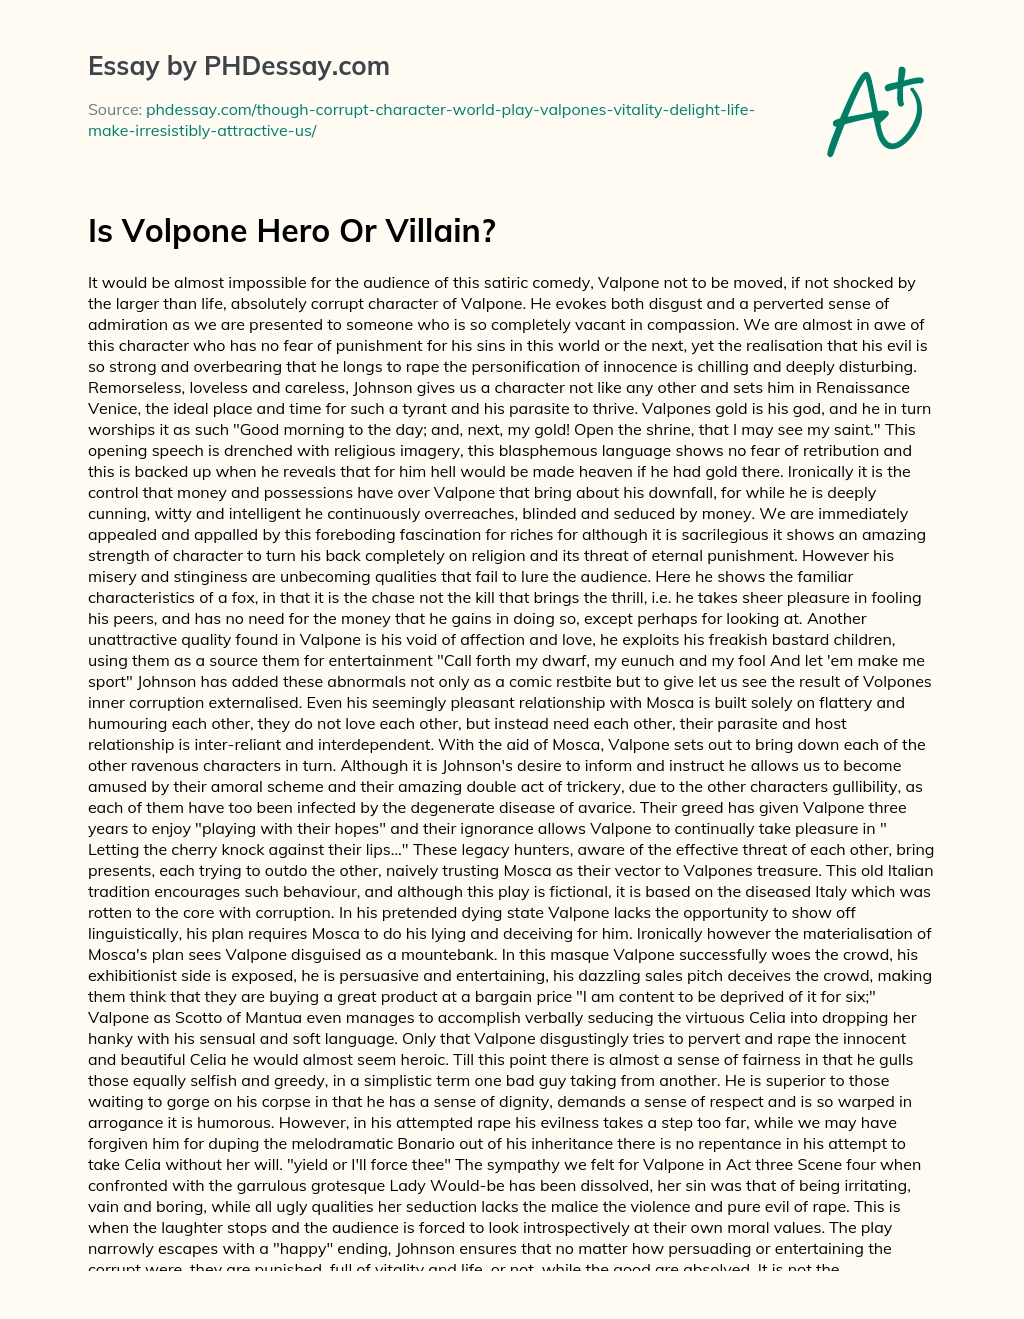 Is Volpone Hero Or Villain? essay